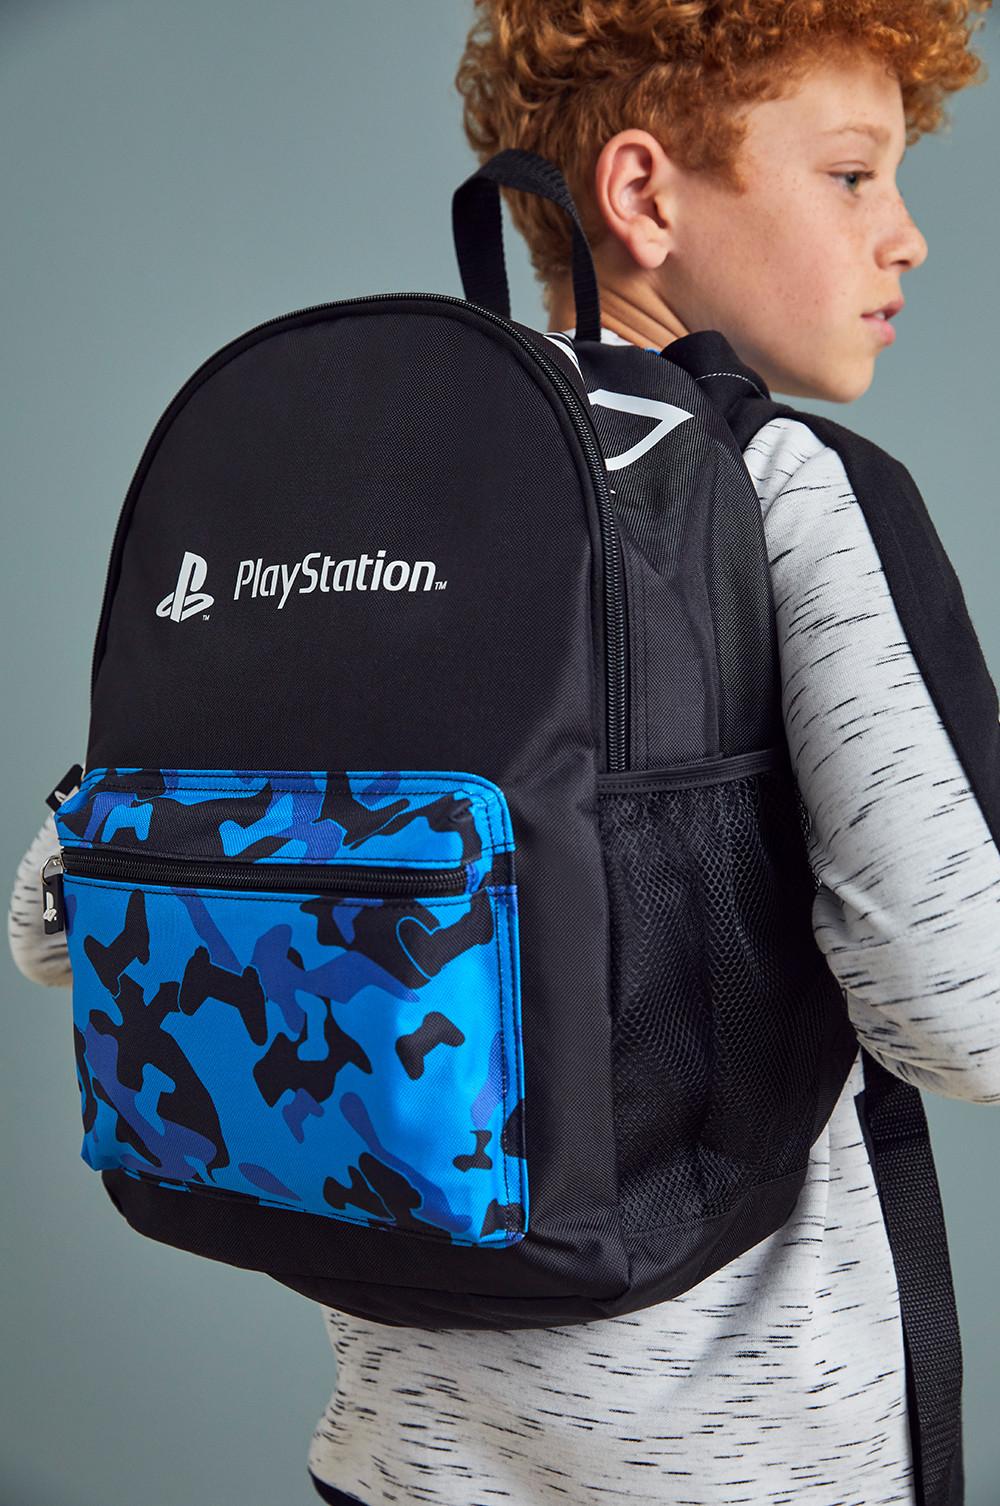 Primark Backpack Water Resistant Lightweight School Casual Bag Headphone Port 